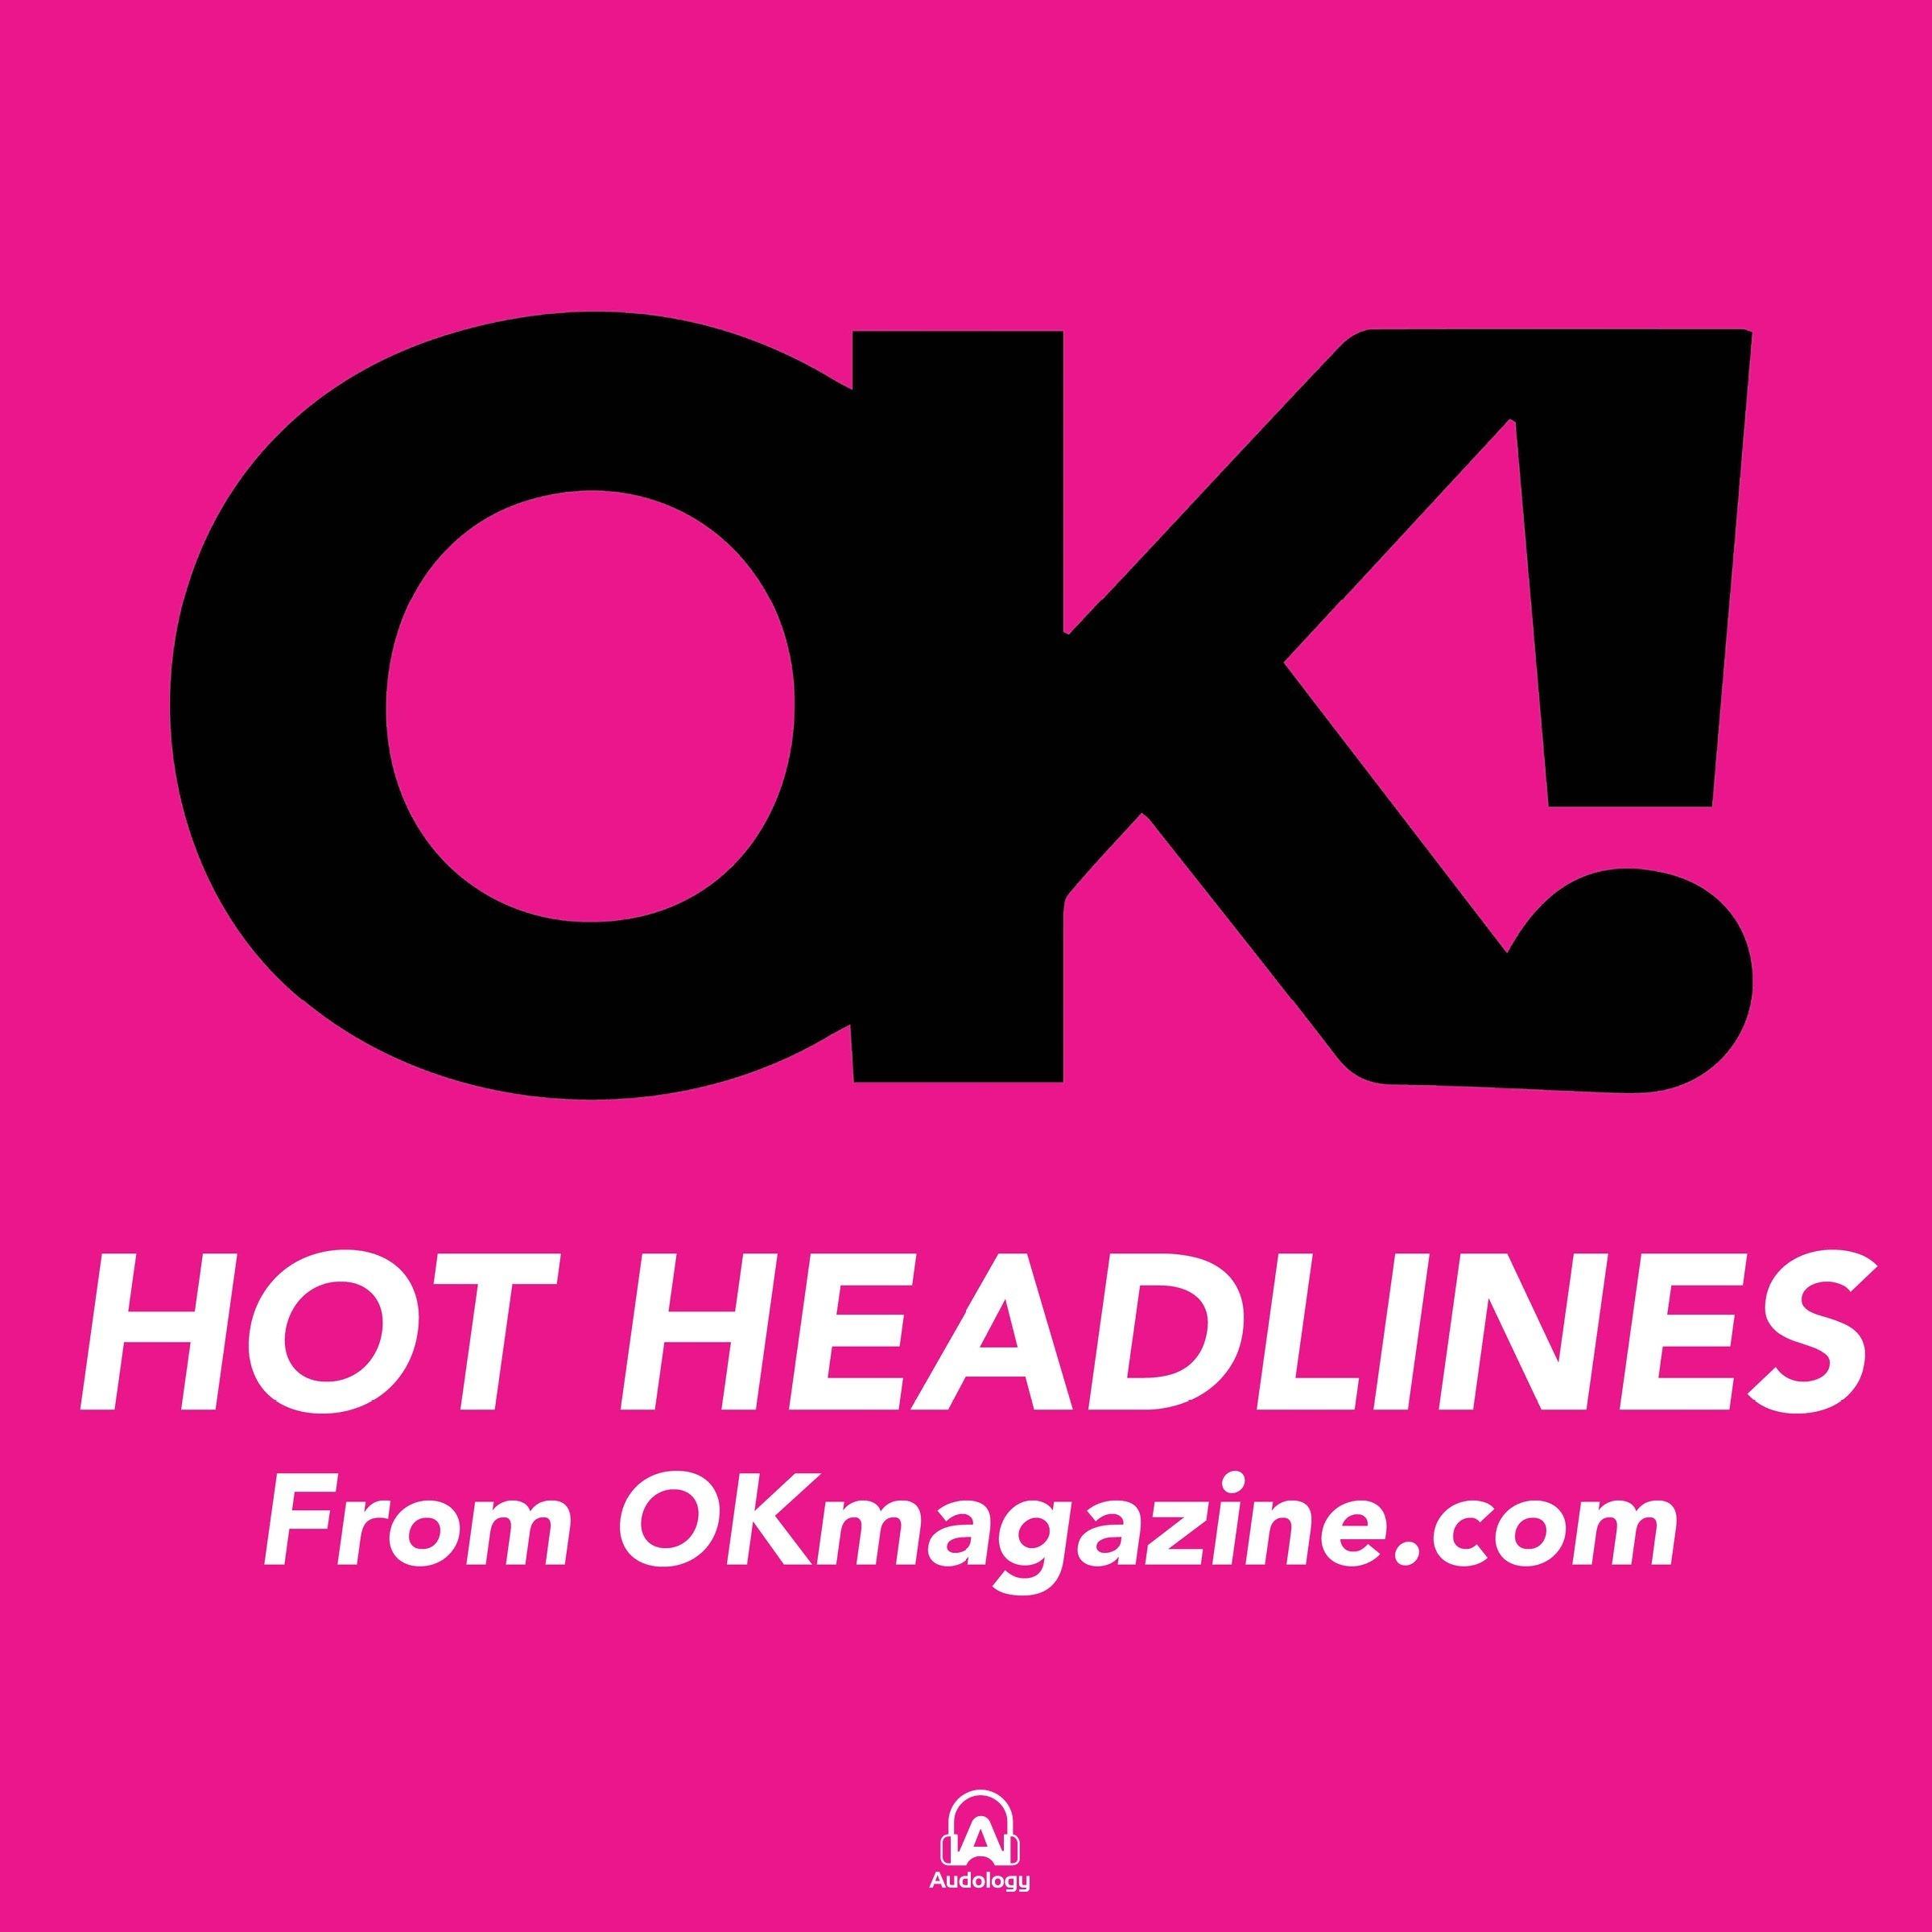 Hot Headlines from OKmagazine.com